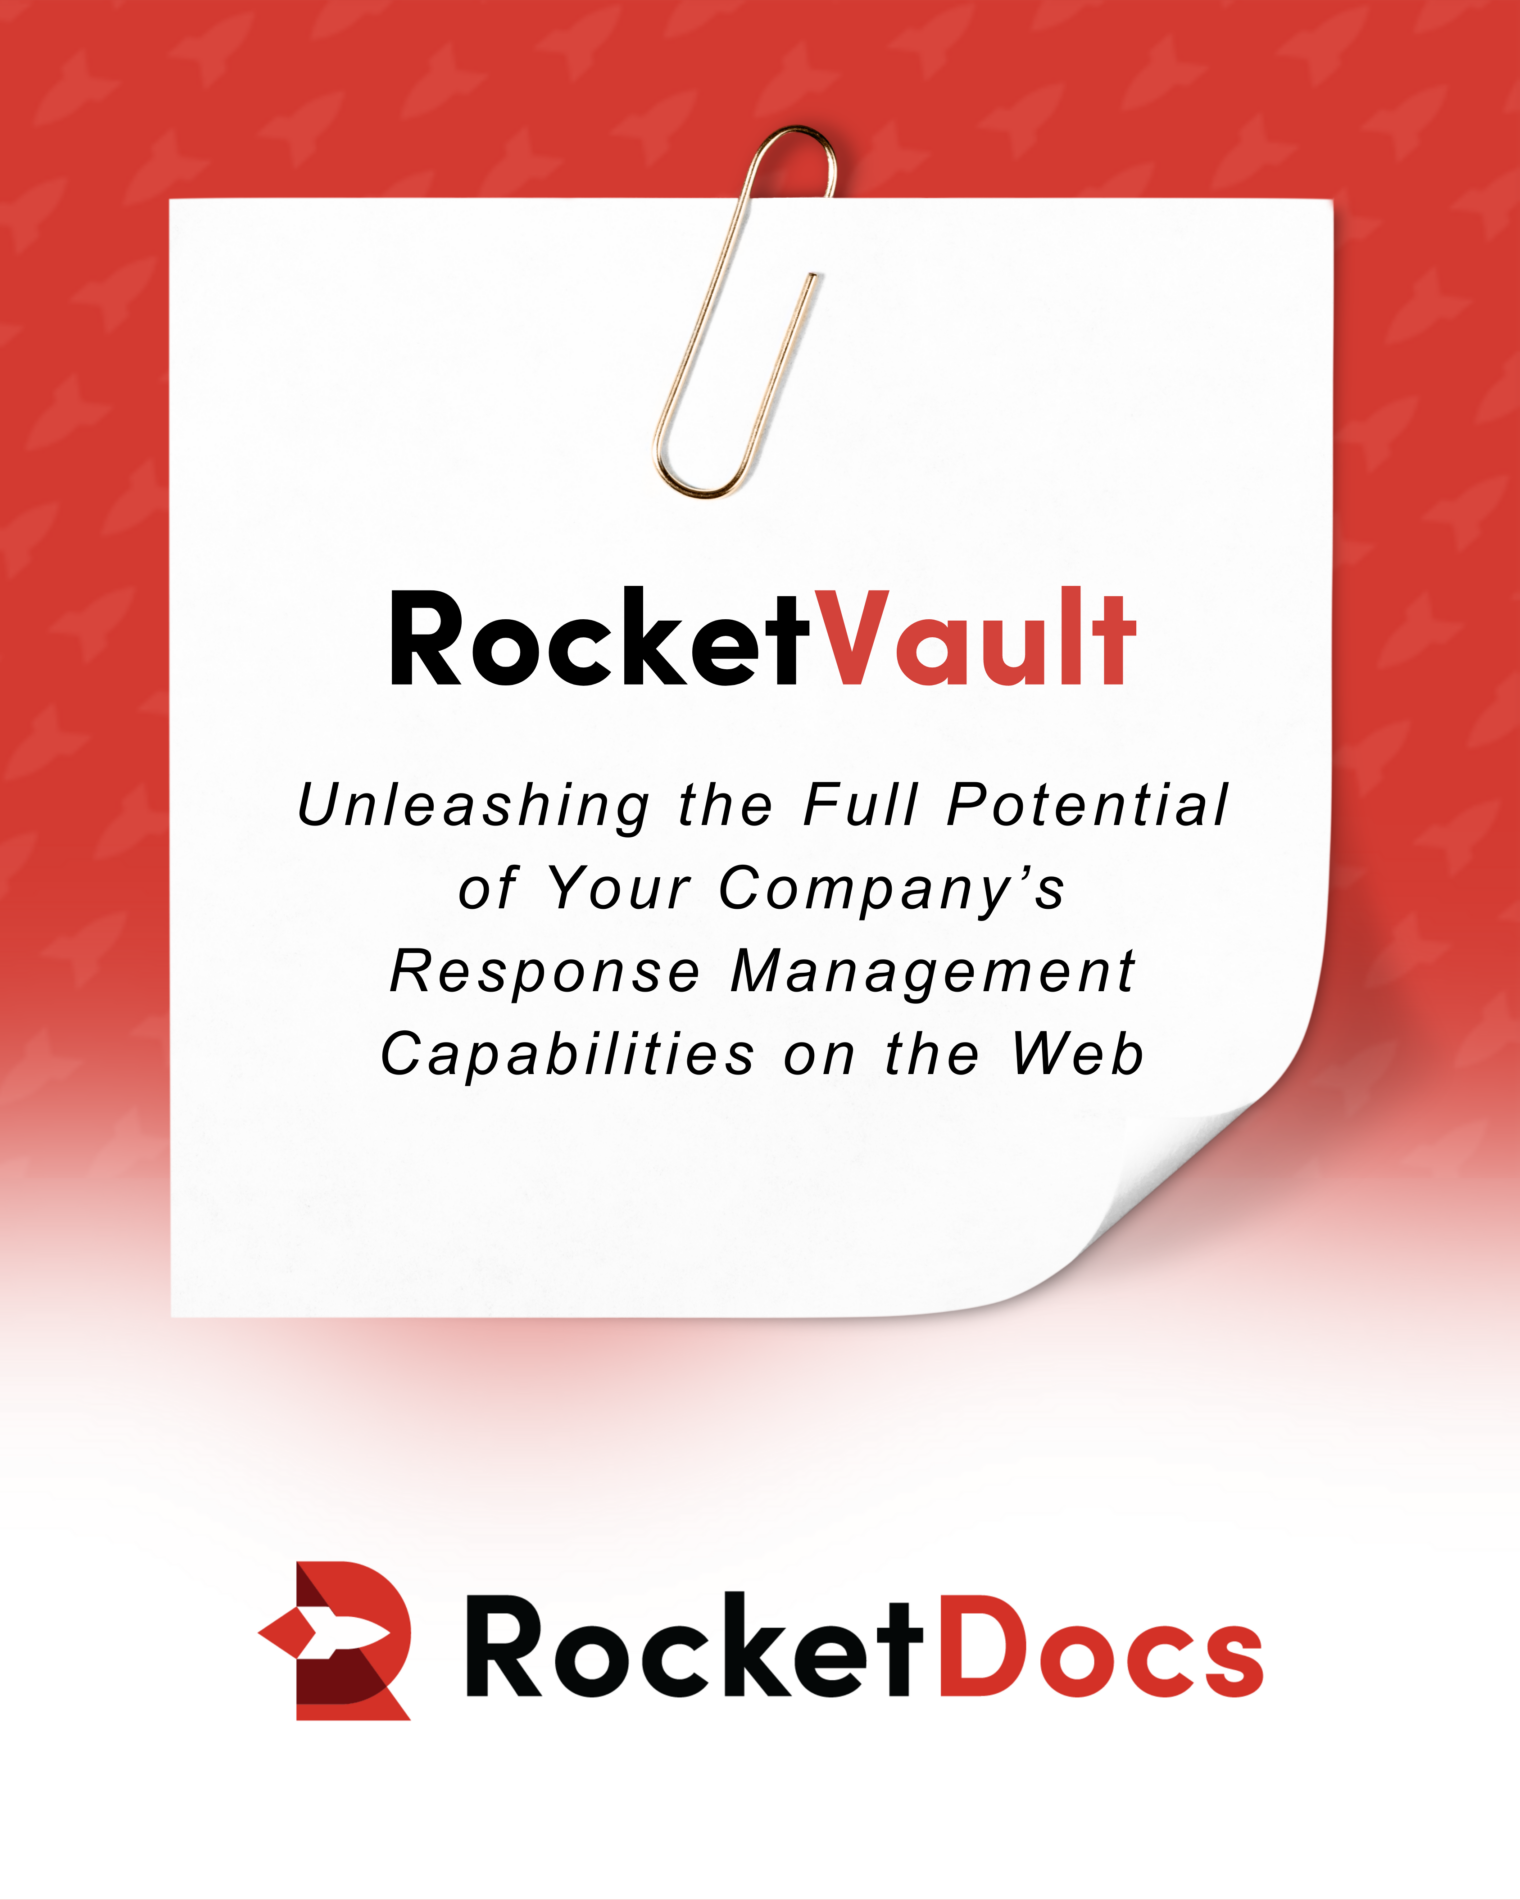 About RocketDocs RocketVault